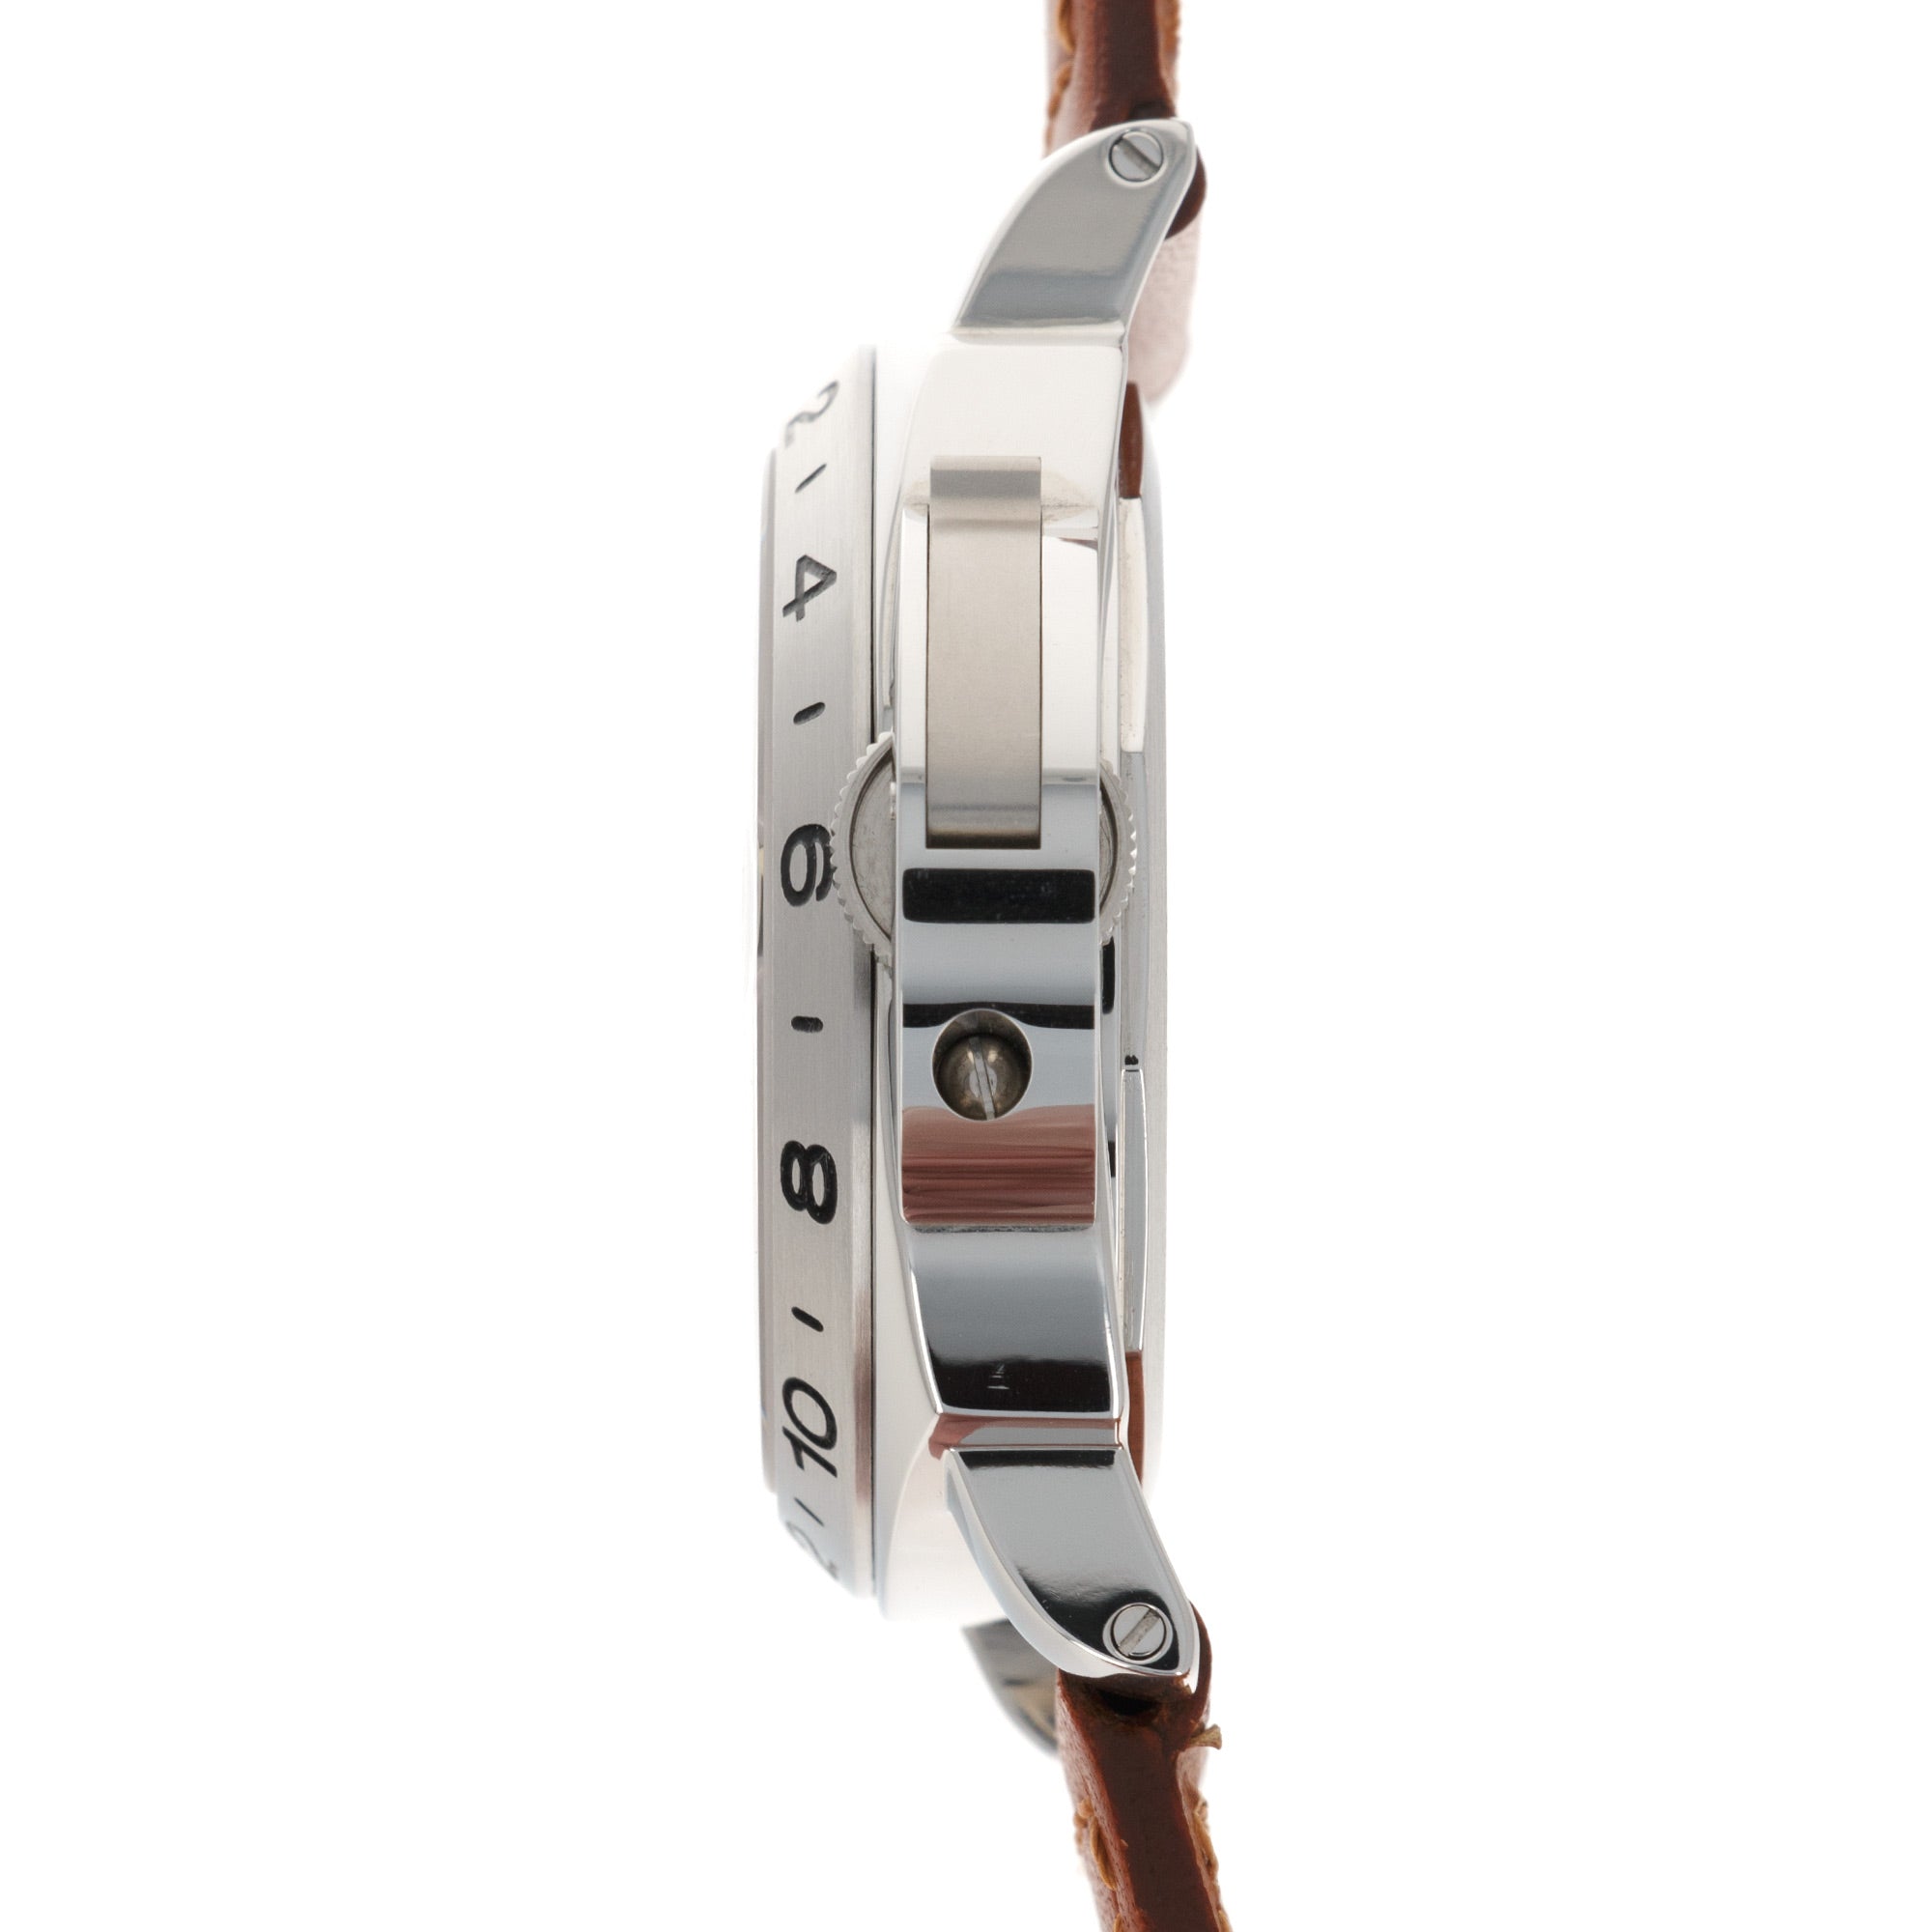 Panerai - Panerai Luminor GMT A-Series Watch Ref. PAM023 - The Keystone Watches